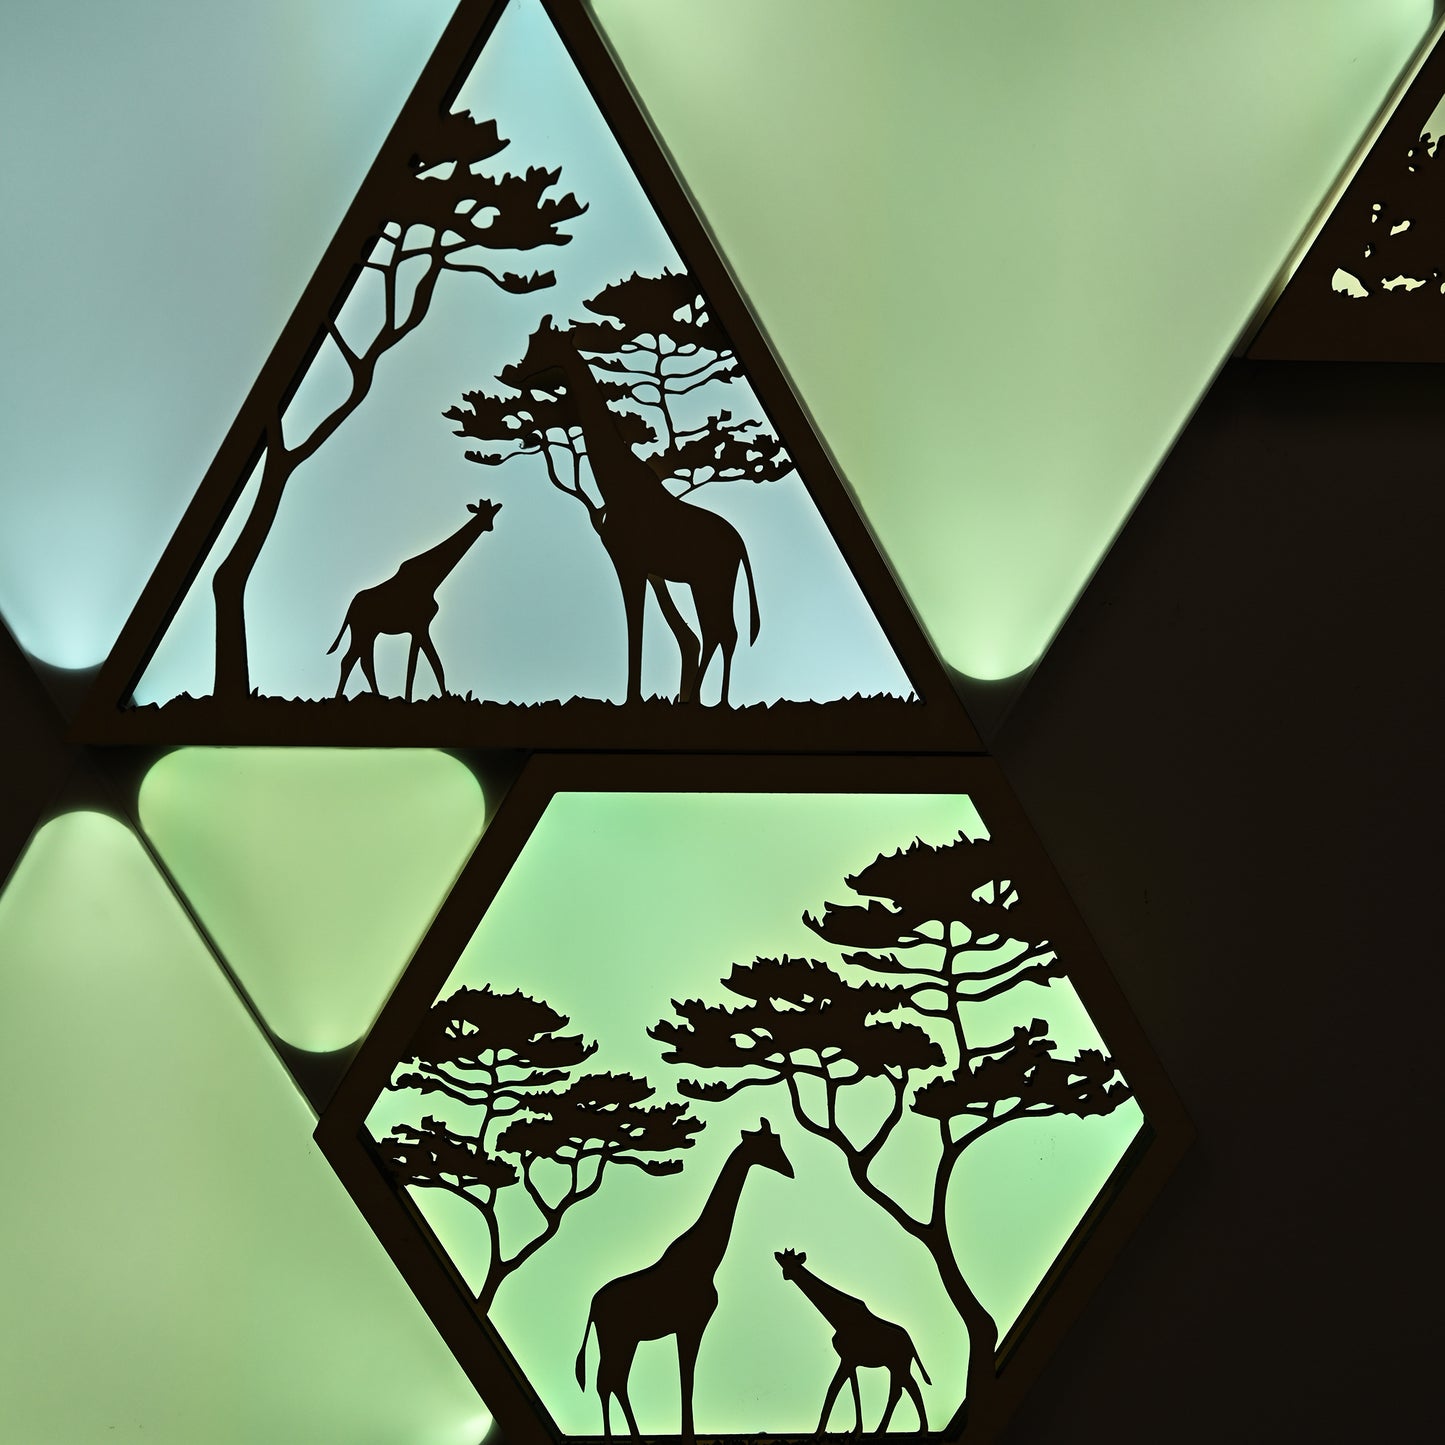 The Giraffes in Safari